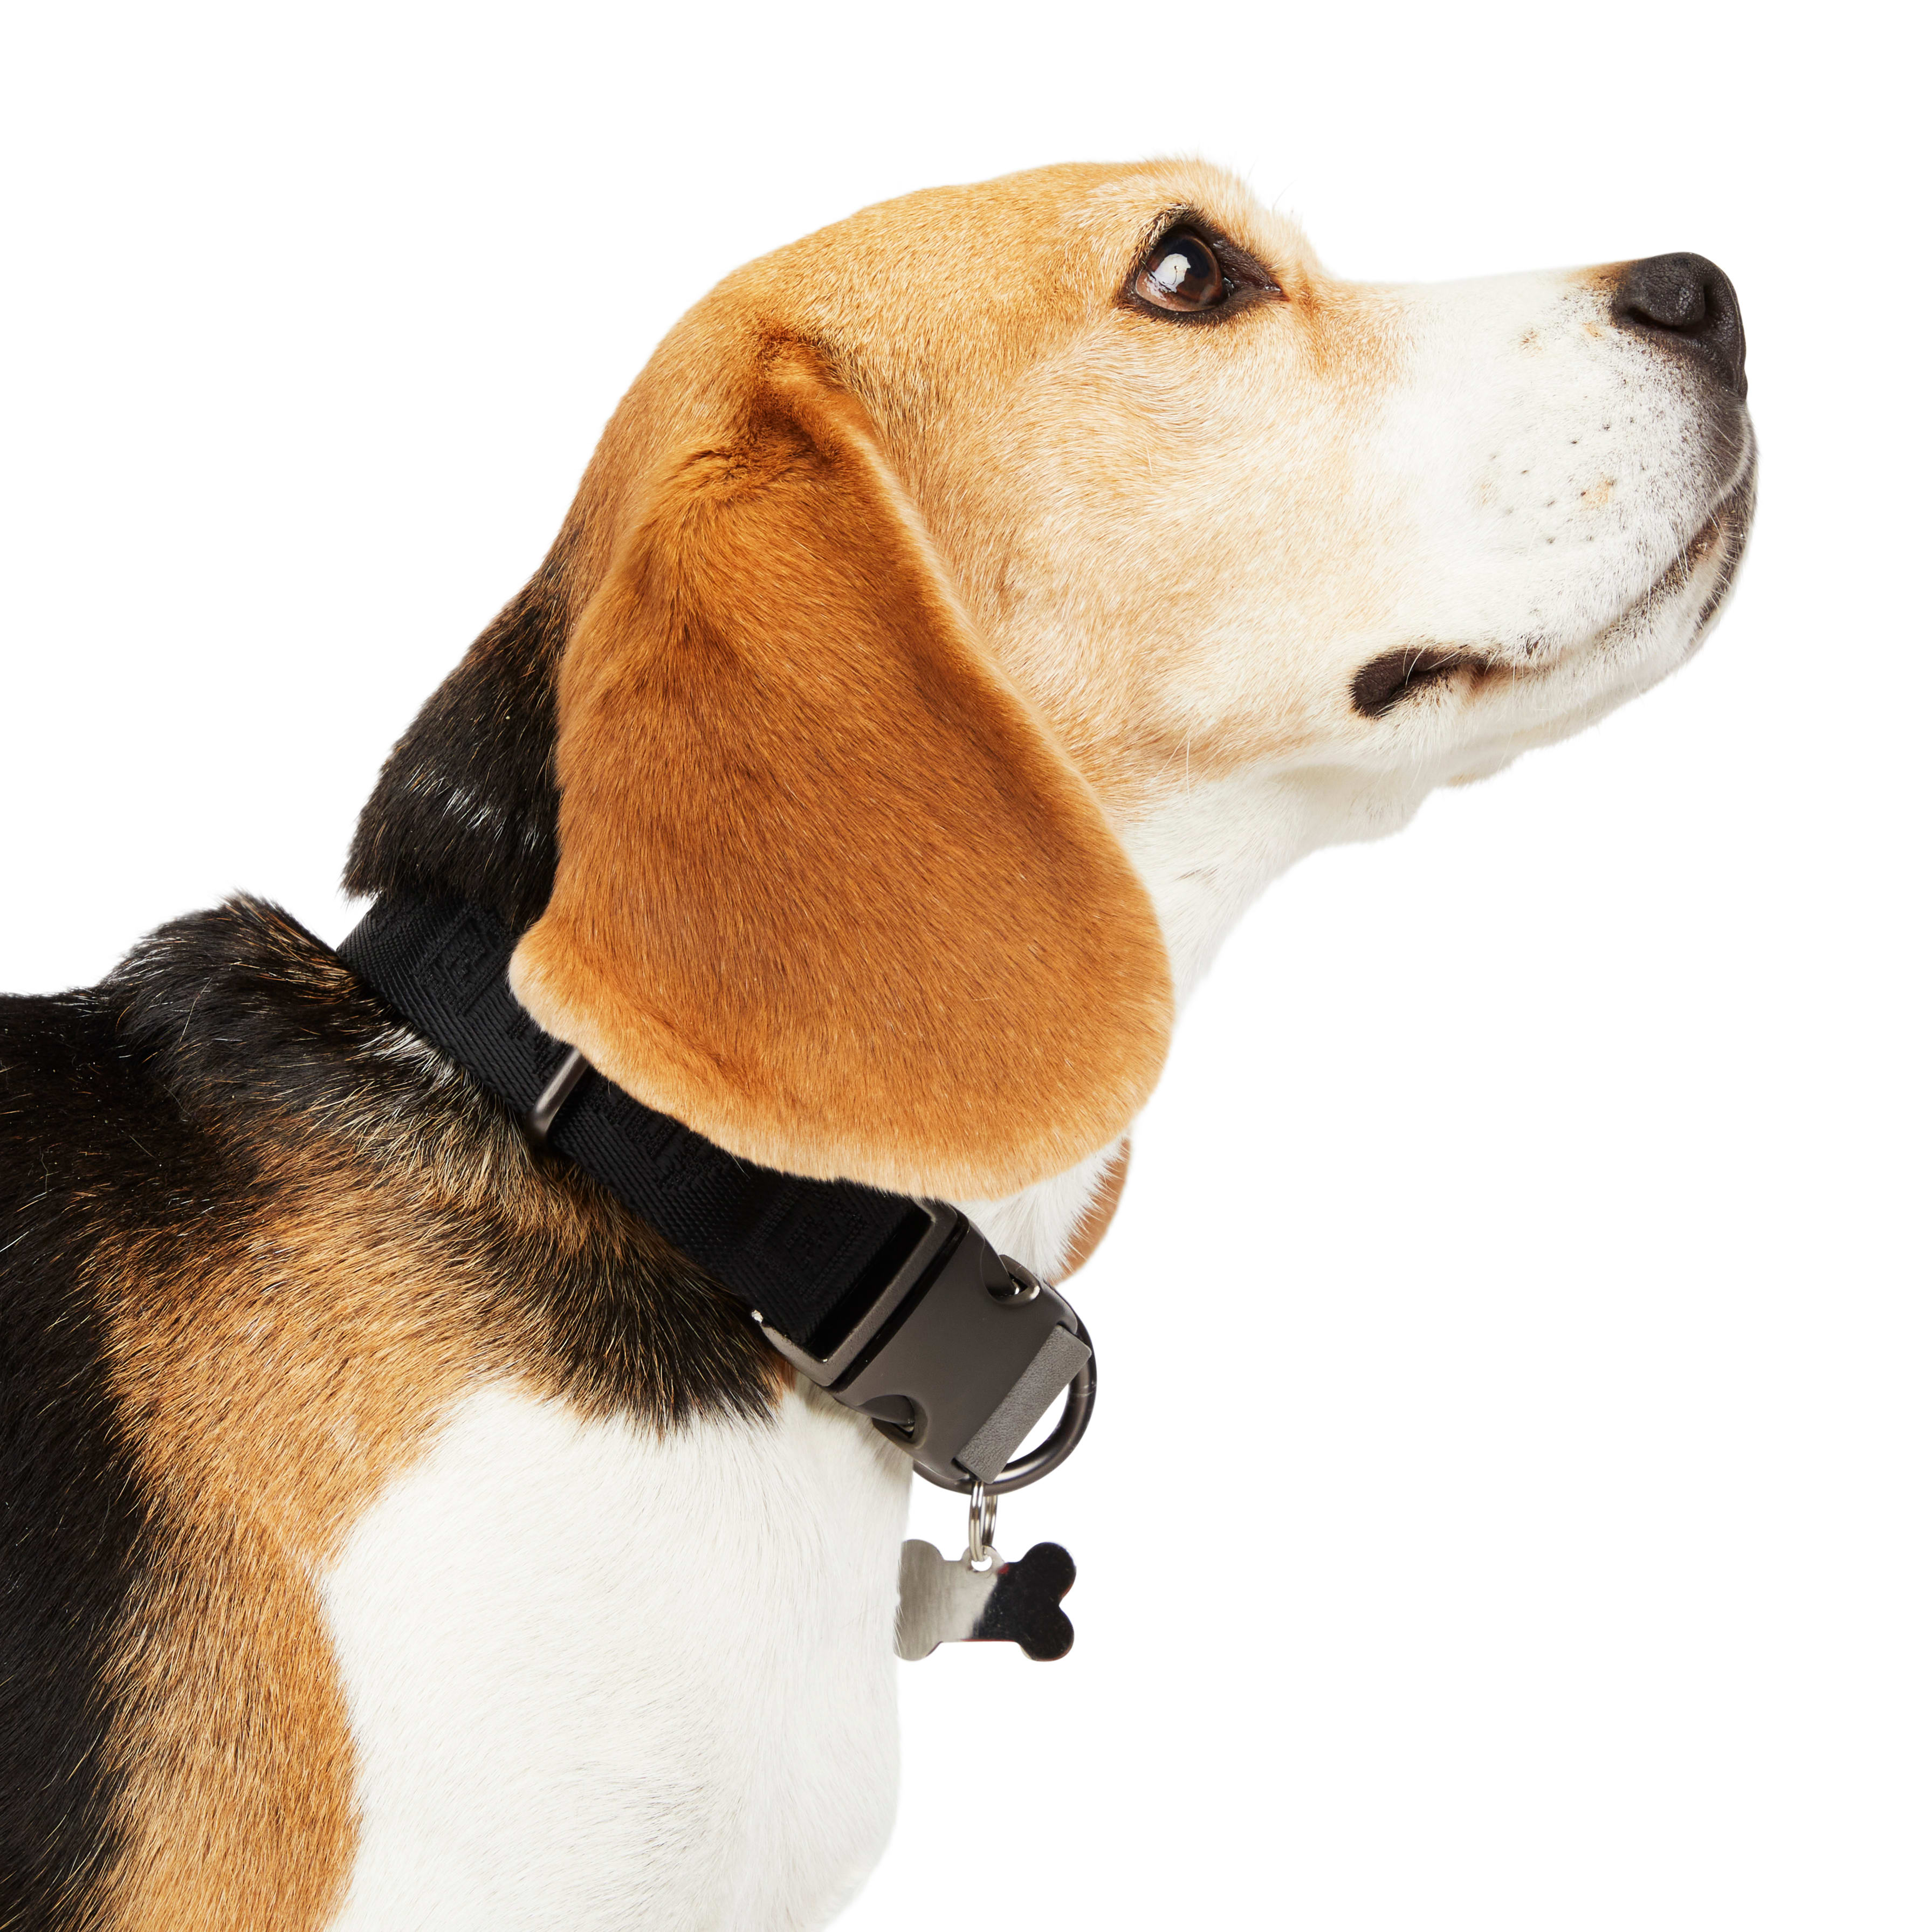 Purchase Wholesale dog collar hardware. Free Returns & Net 60